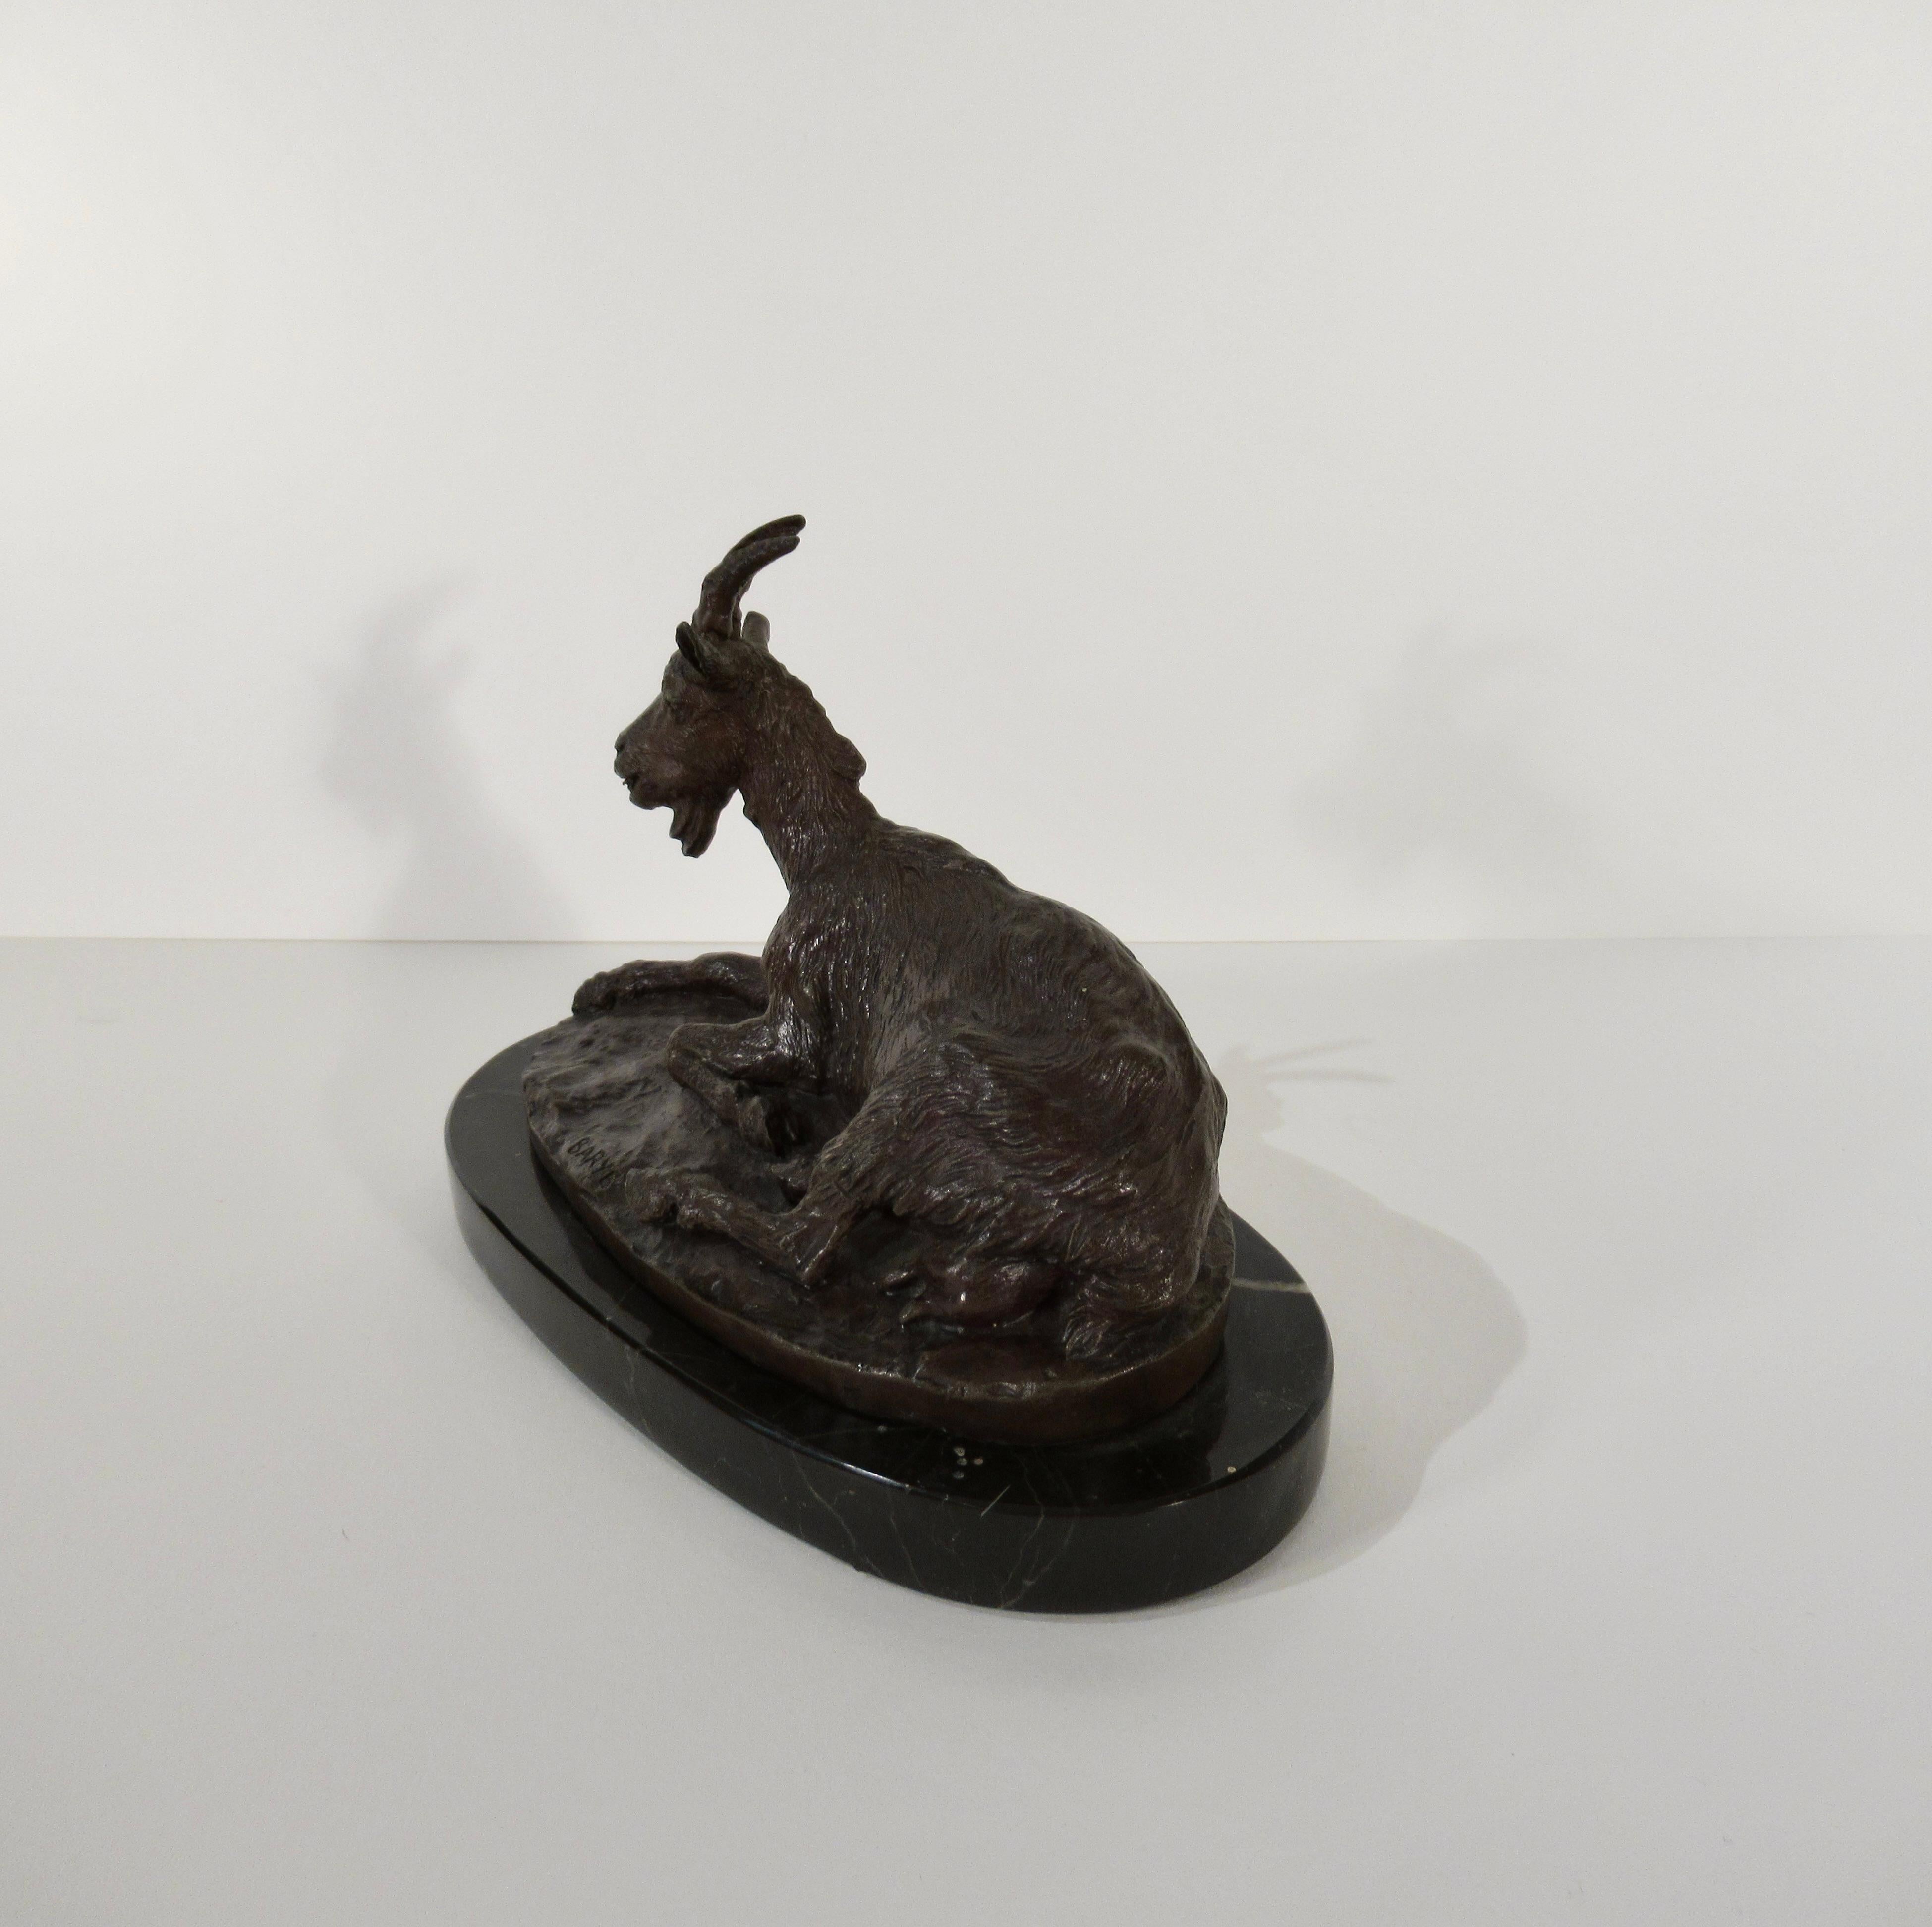 Chevre Allongee (Reclining Goat) - Realist Sculpture by Antoine-Louis Barye